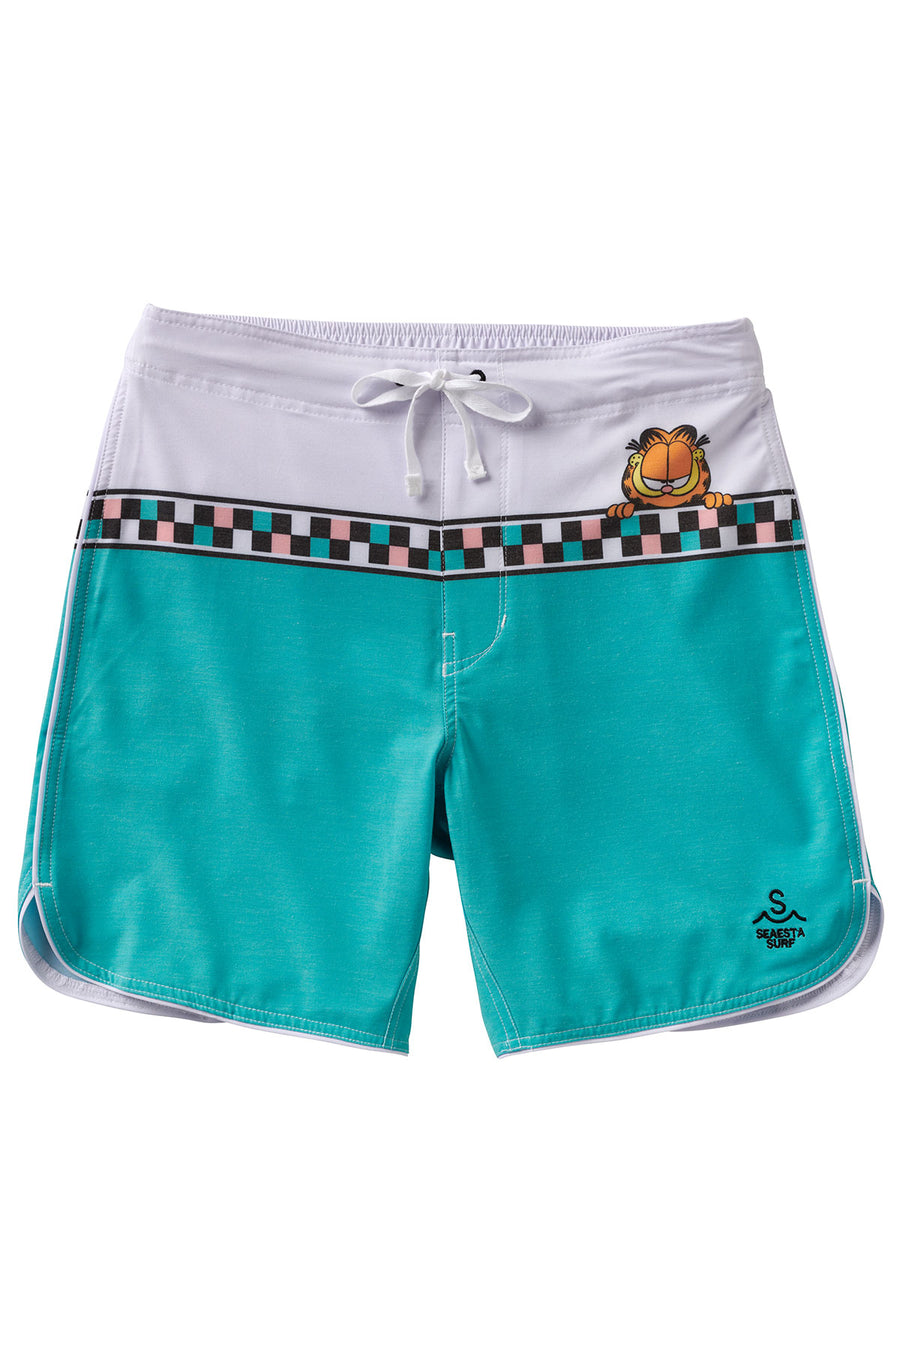 Seaesta Surf x Garfield® Boardshorts / Mens / Monday Checkers